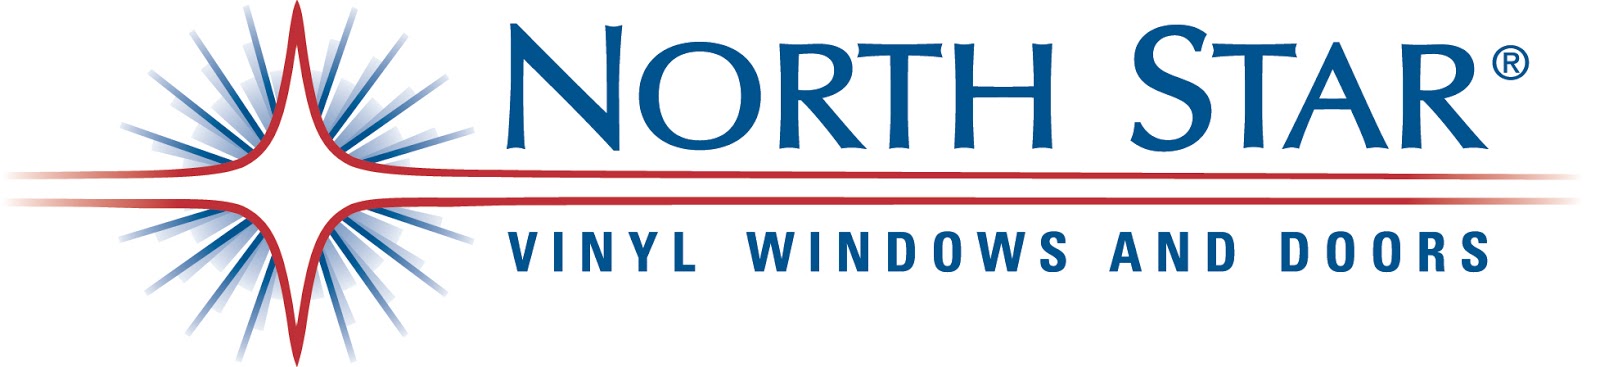 North Star Vinyl Windows and Doors